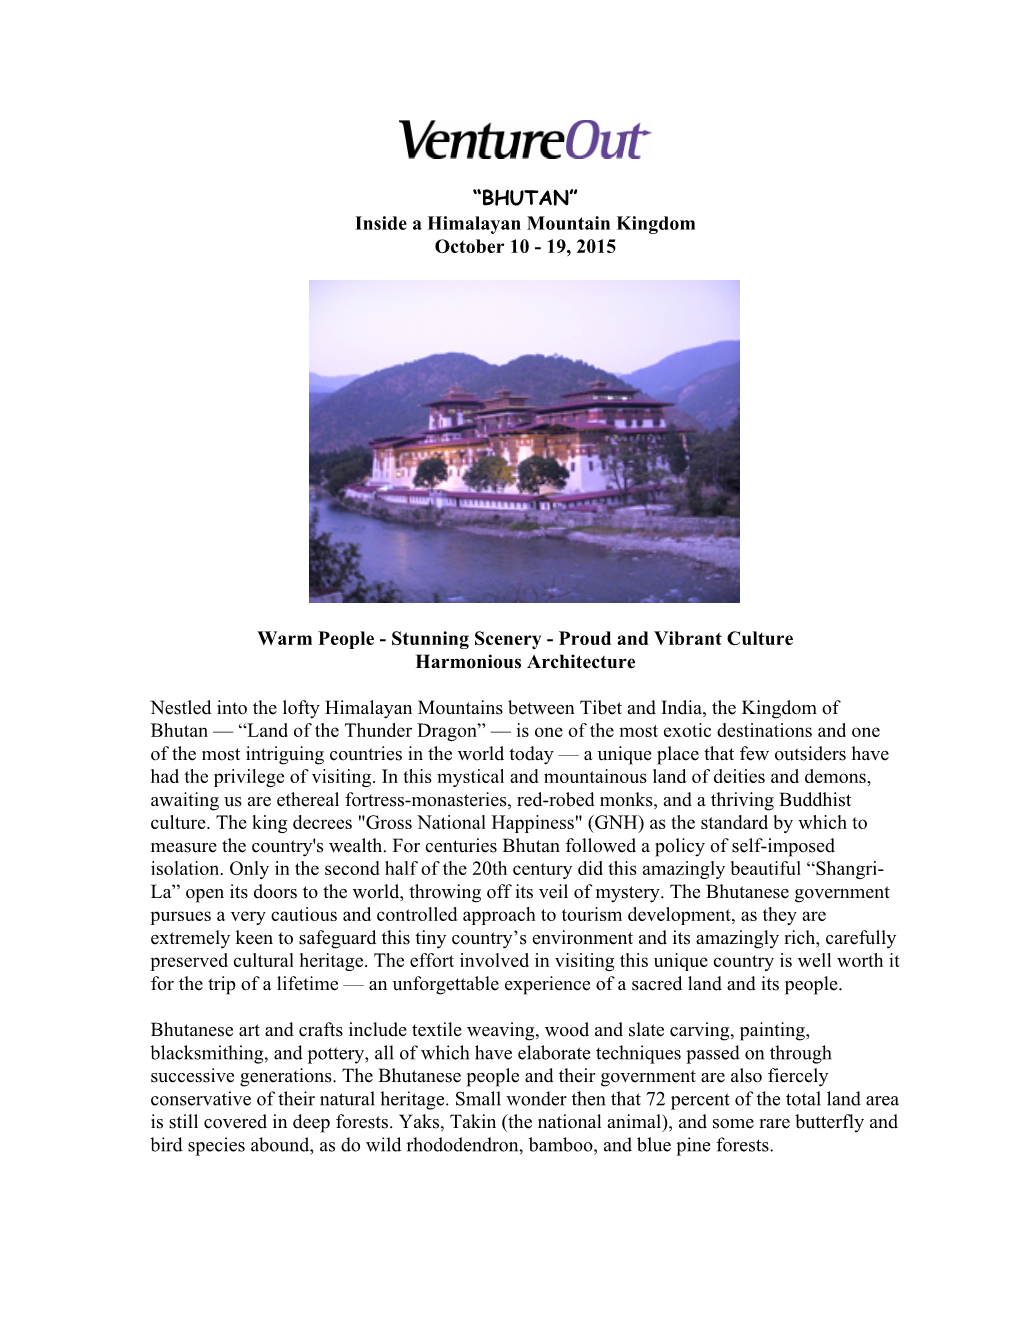 BHUTAN” Inside a Himalayan Mountain Kingdom October 10 - 19, 2015